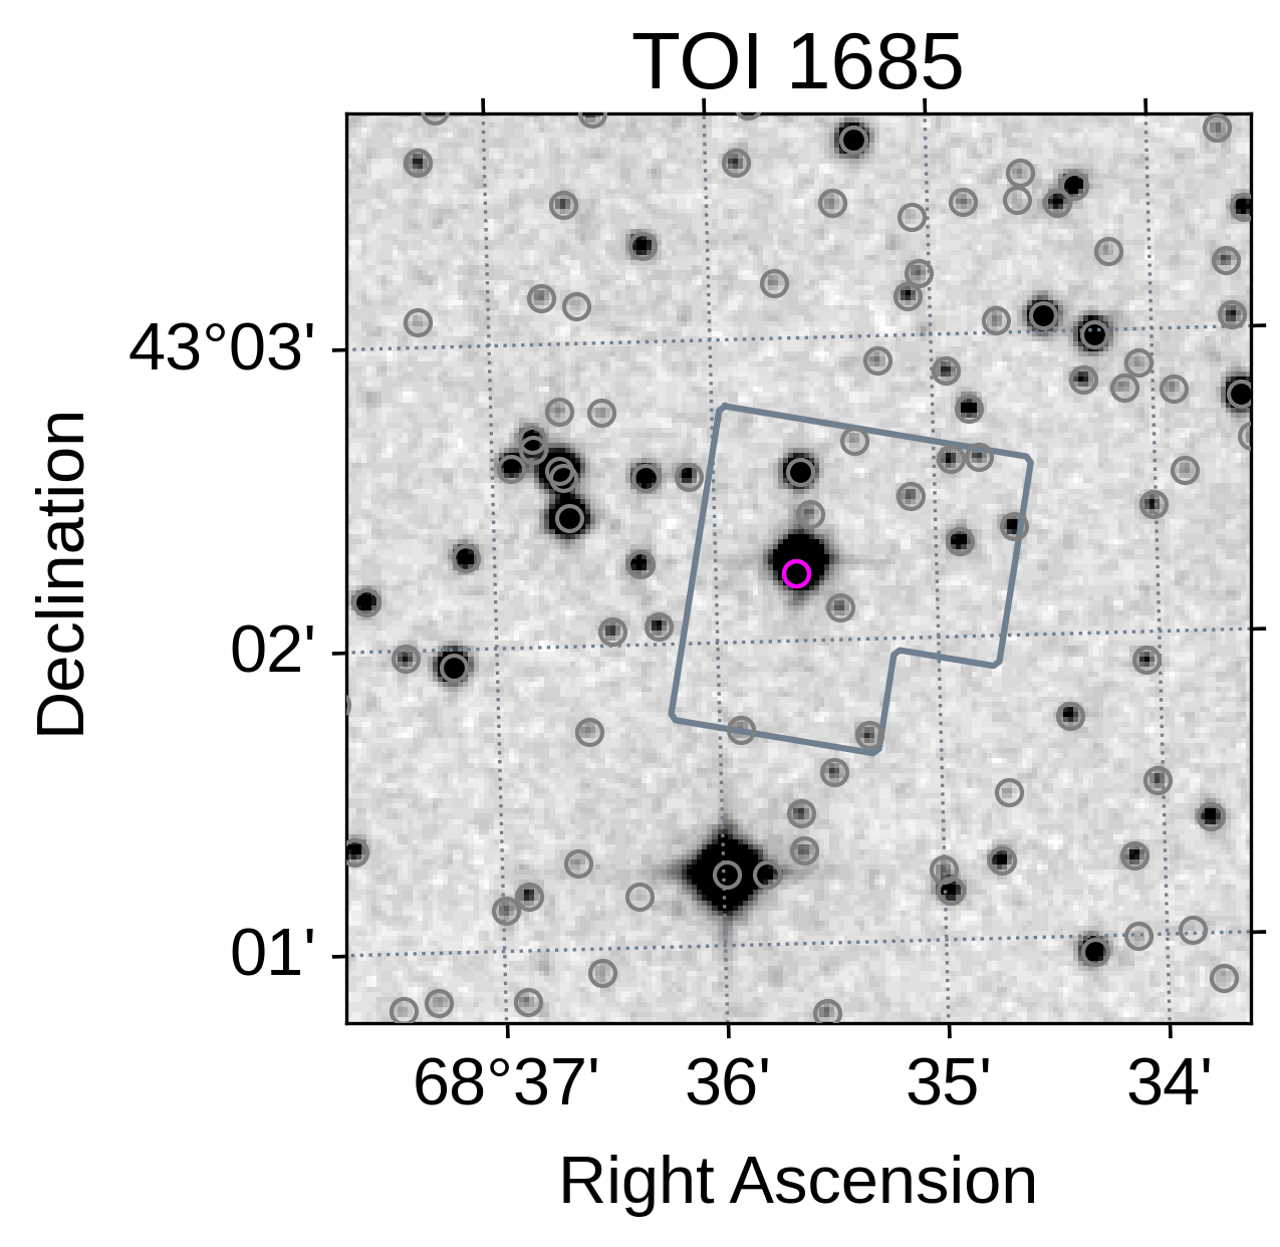 Зоря TOI-1685 у даних TESS. Teruyuki Hirano et al. / The Astronomical Journal, 2021